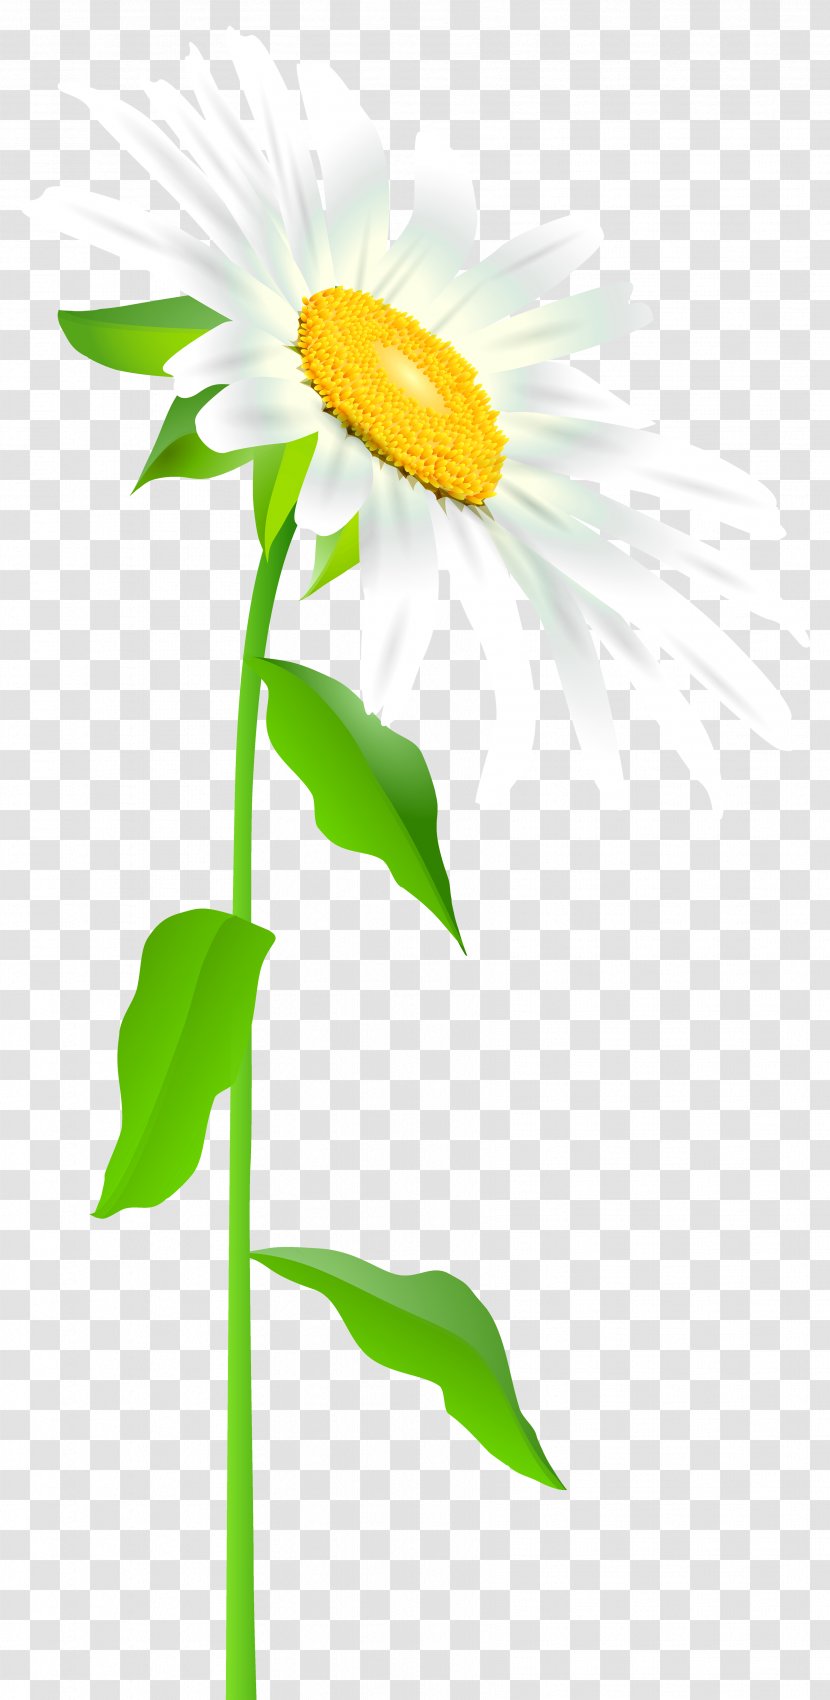 Common Sunflower Text Leaf Illustration - Petal - Daisy With Stem Transparent Clip Art Image Transparent PNG